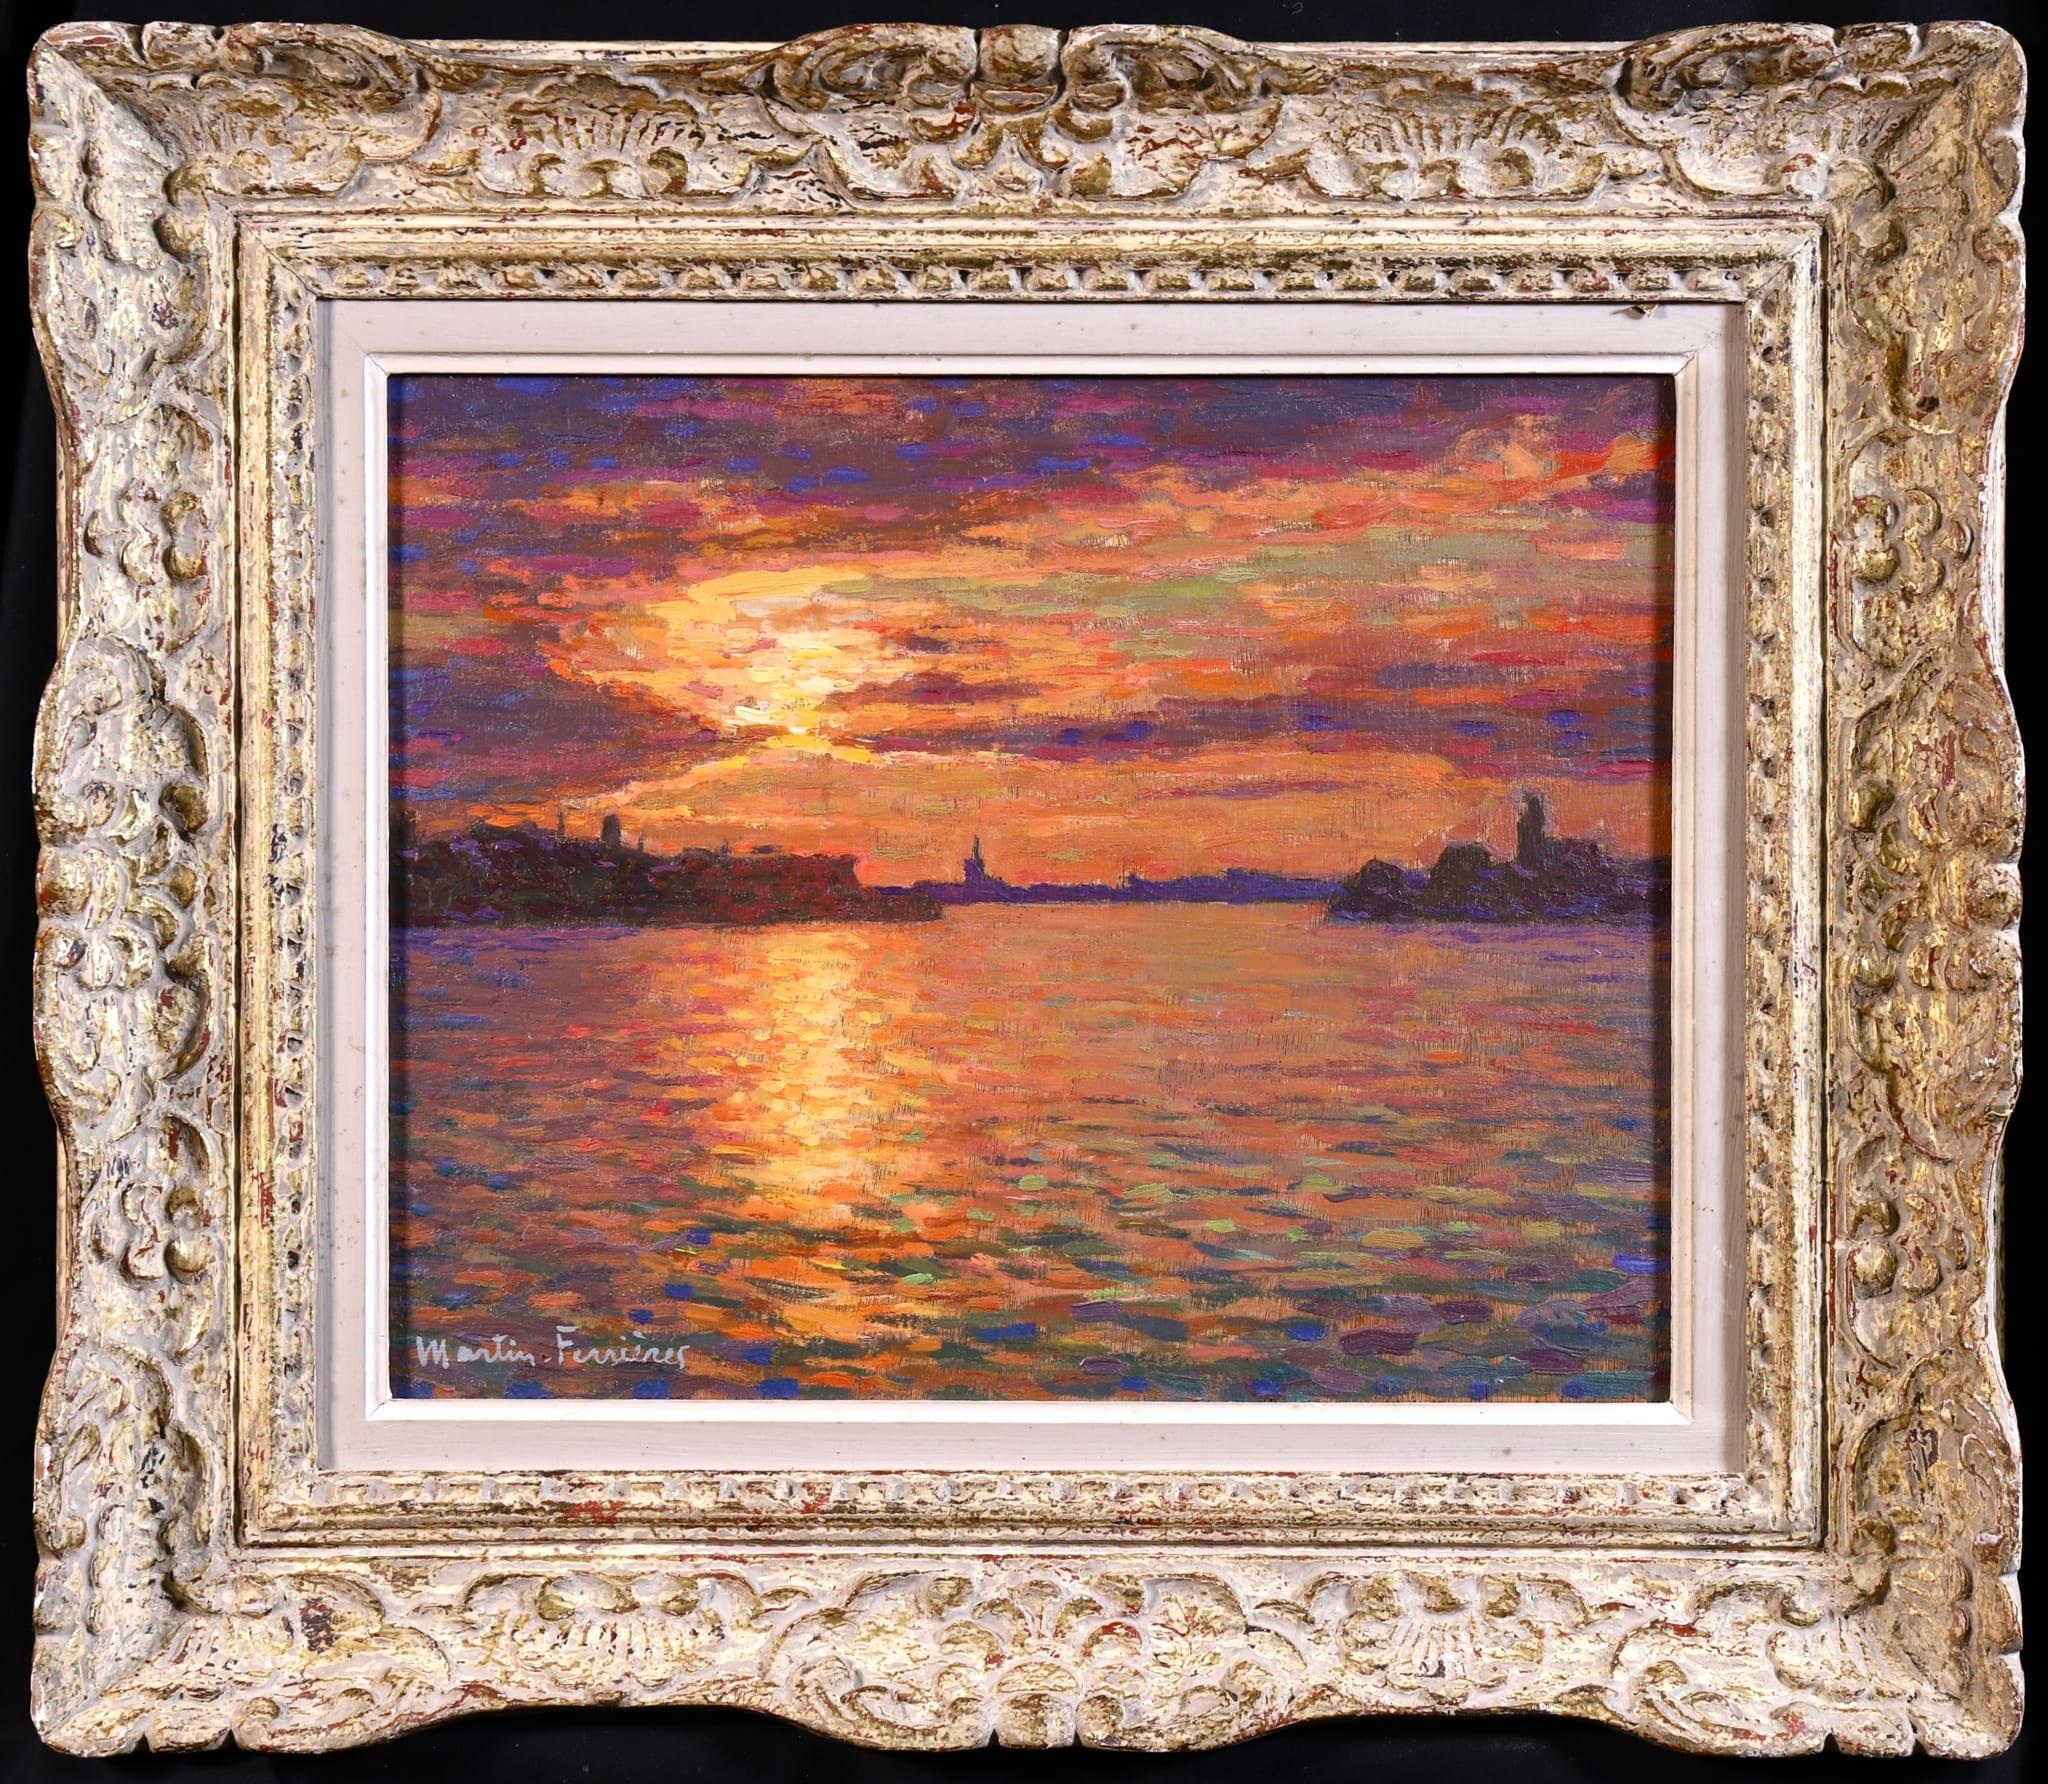 Jacques Martin-Ferrières Landscape Painting - Sunset - Amsterdam - Post Impressionist Oil, Seascape - Jacques Martin-Ferrieres